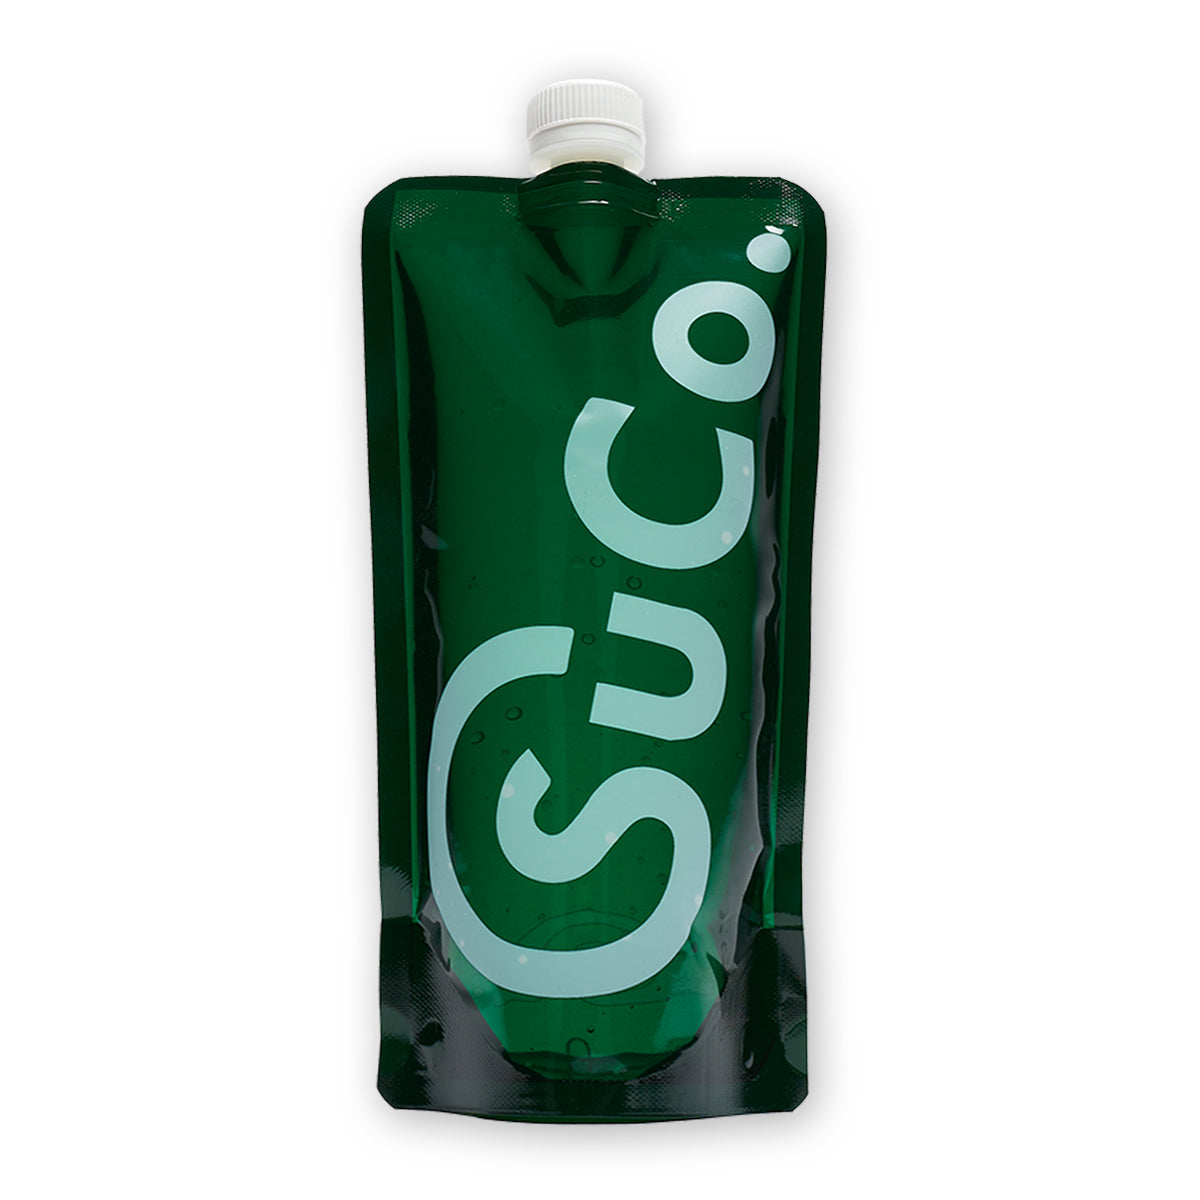 Givin Leaf SuCo (Good) - 600 ml